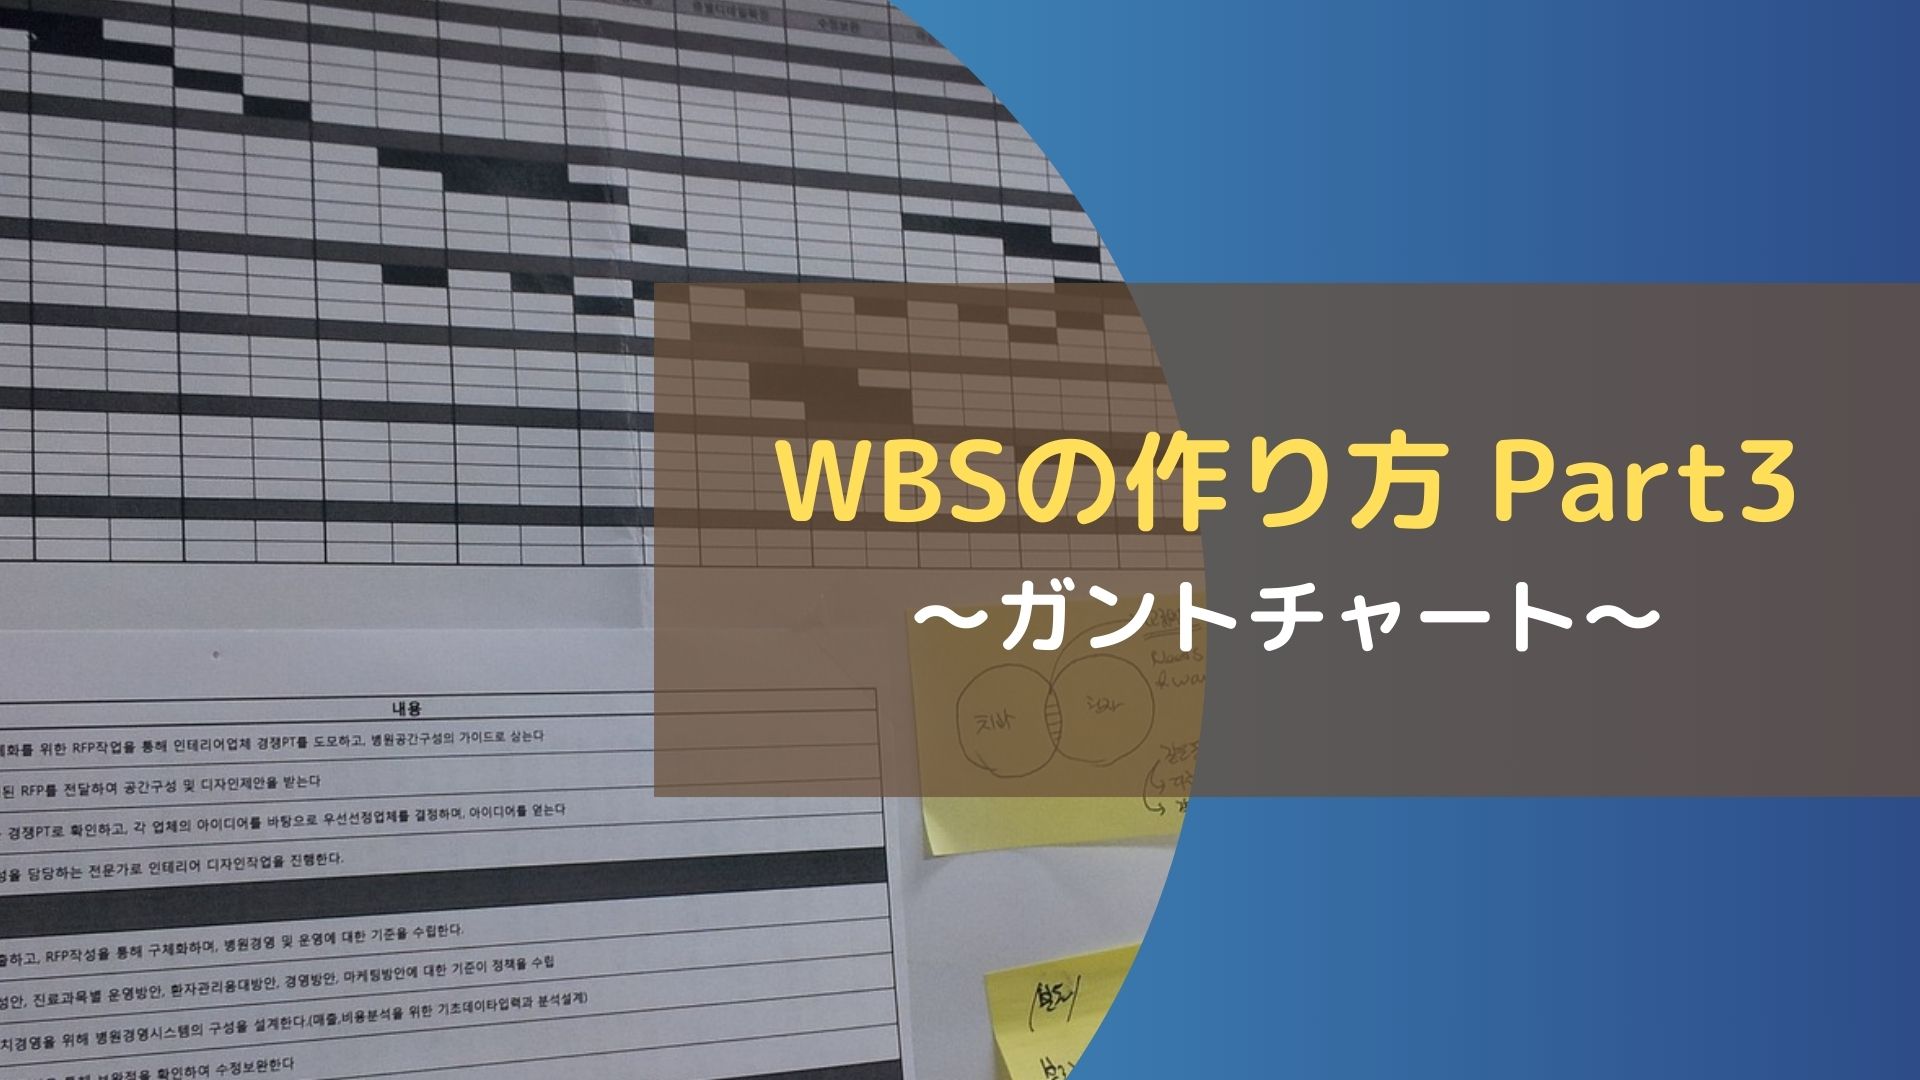 WBSの作り方 Part3～ガントチャート～